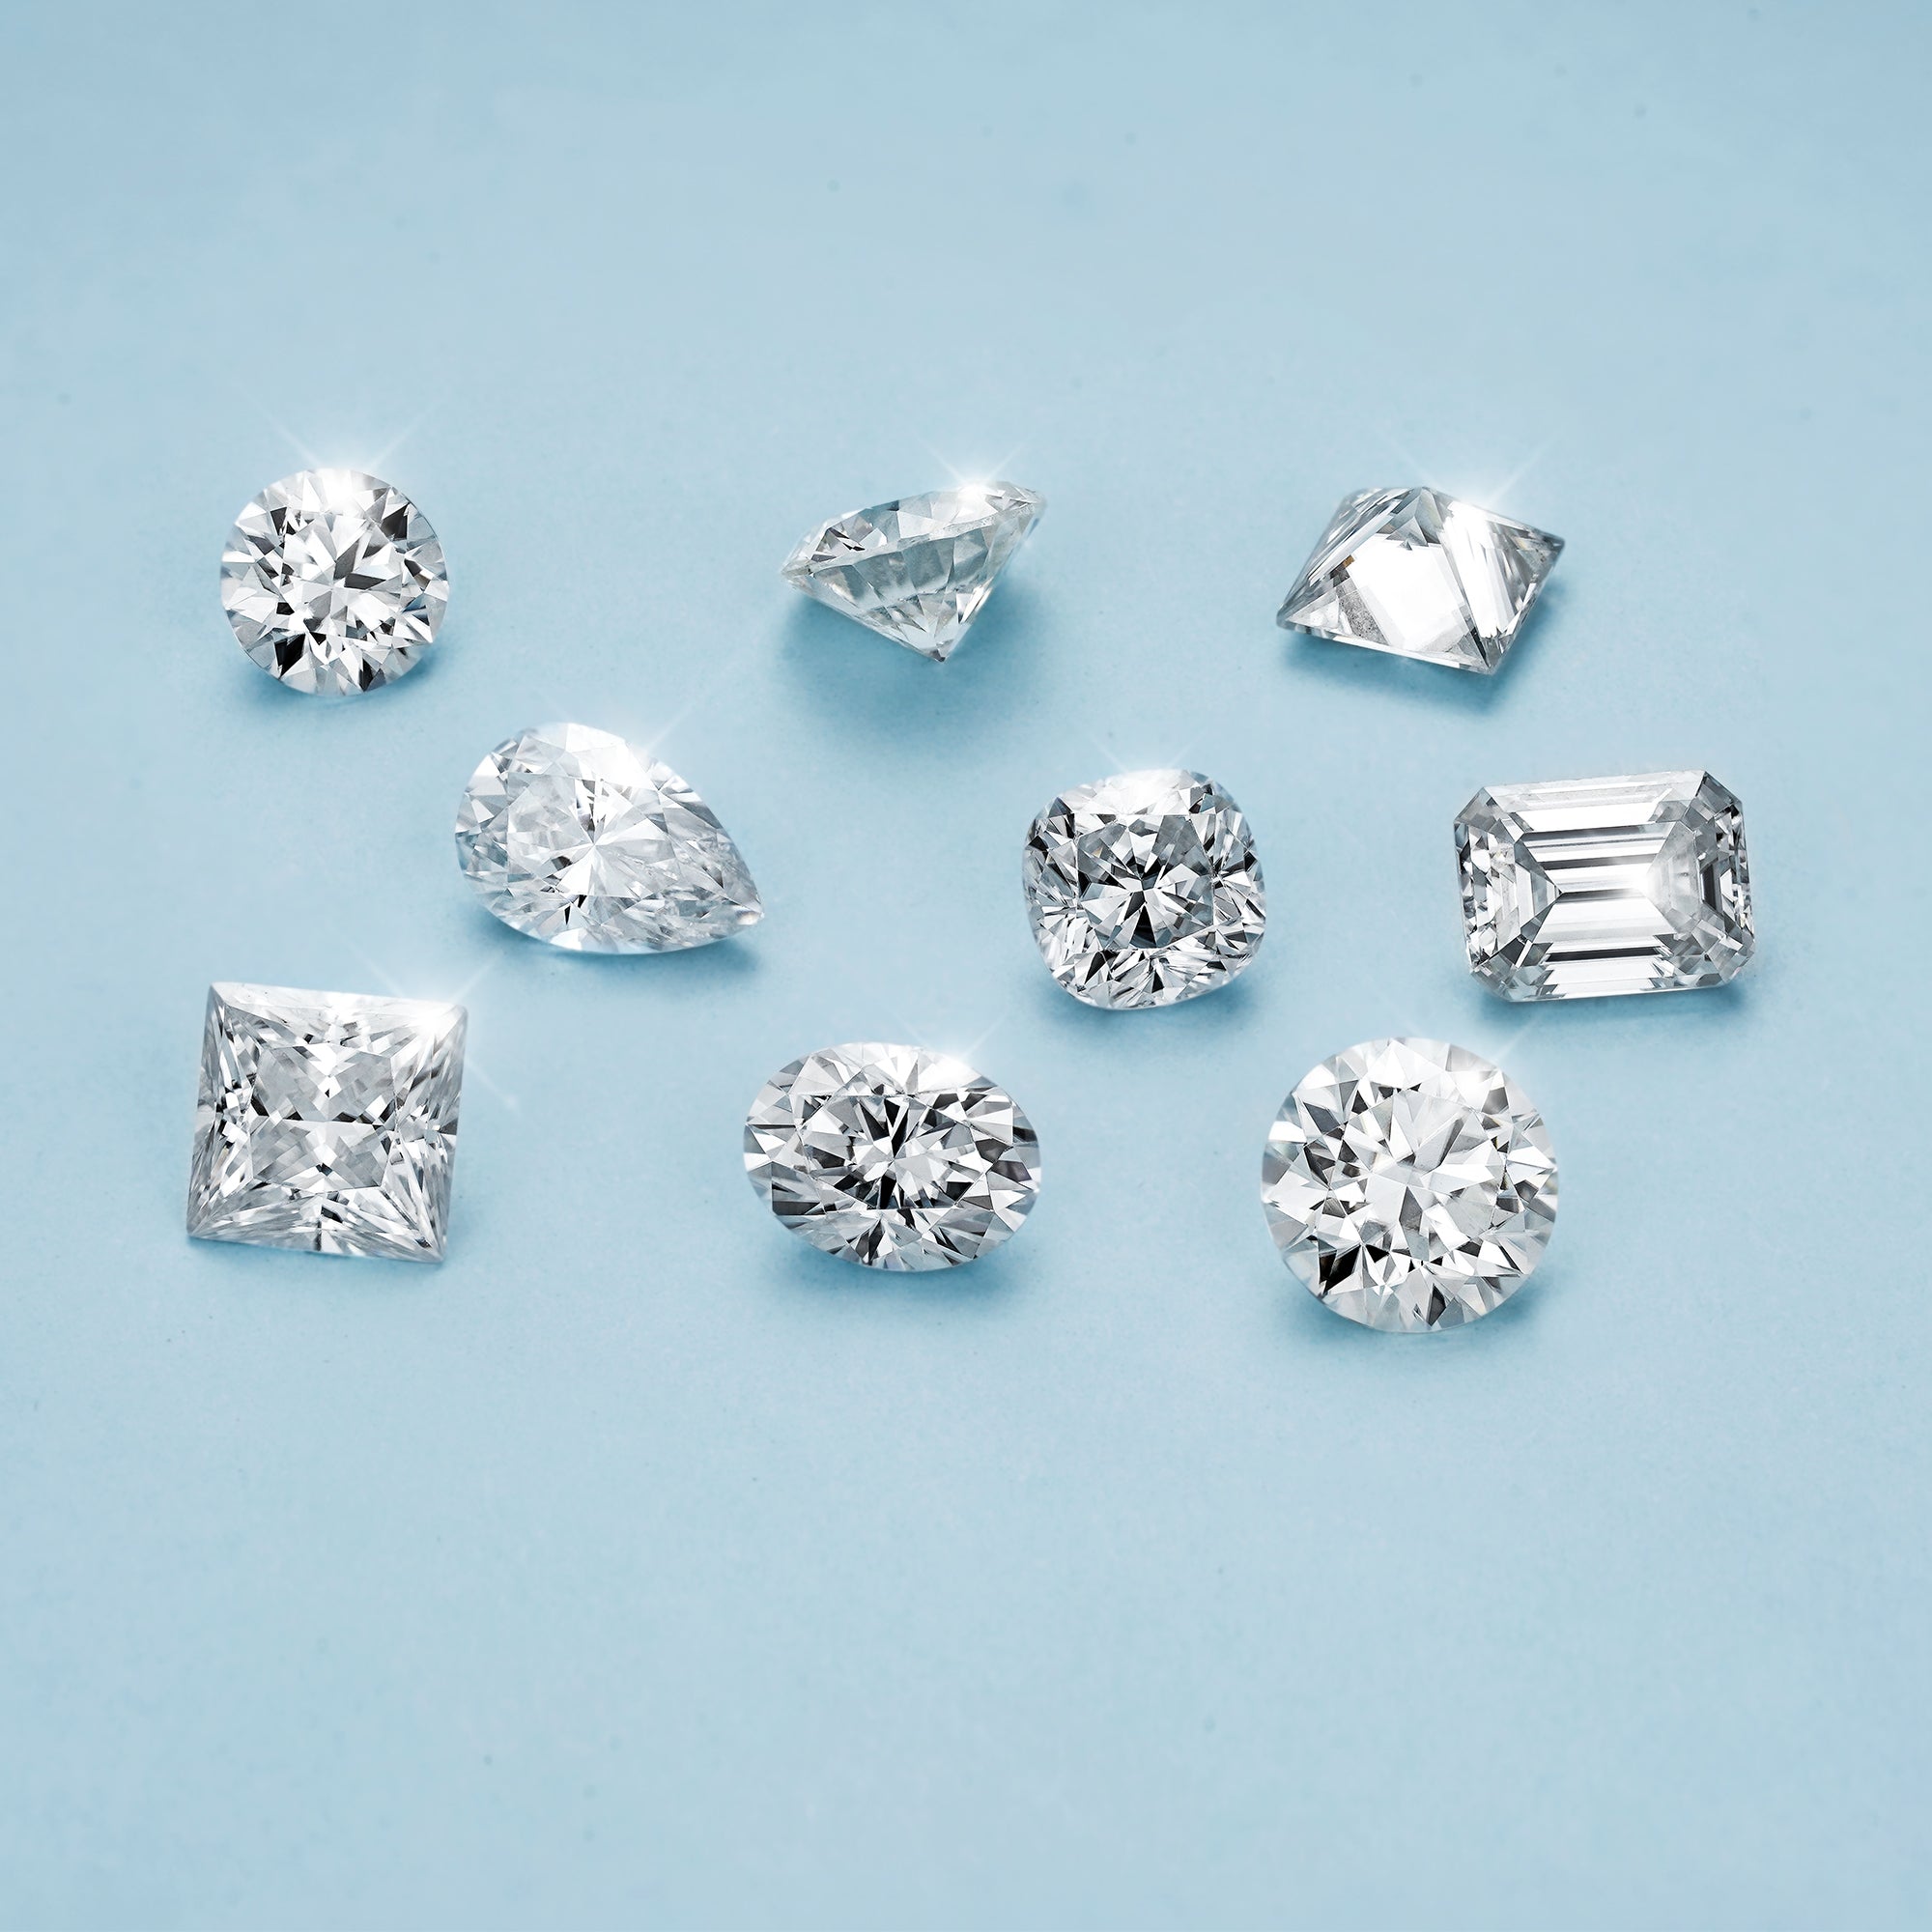 Brilliant moissanite diamond jewelry. Diamonds vs Moissanite